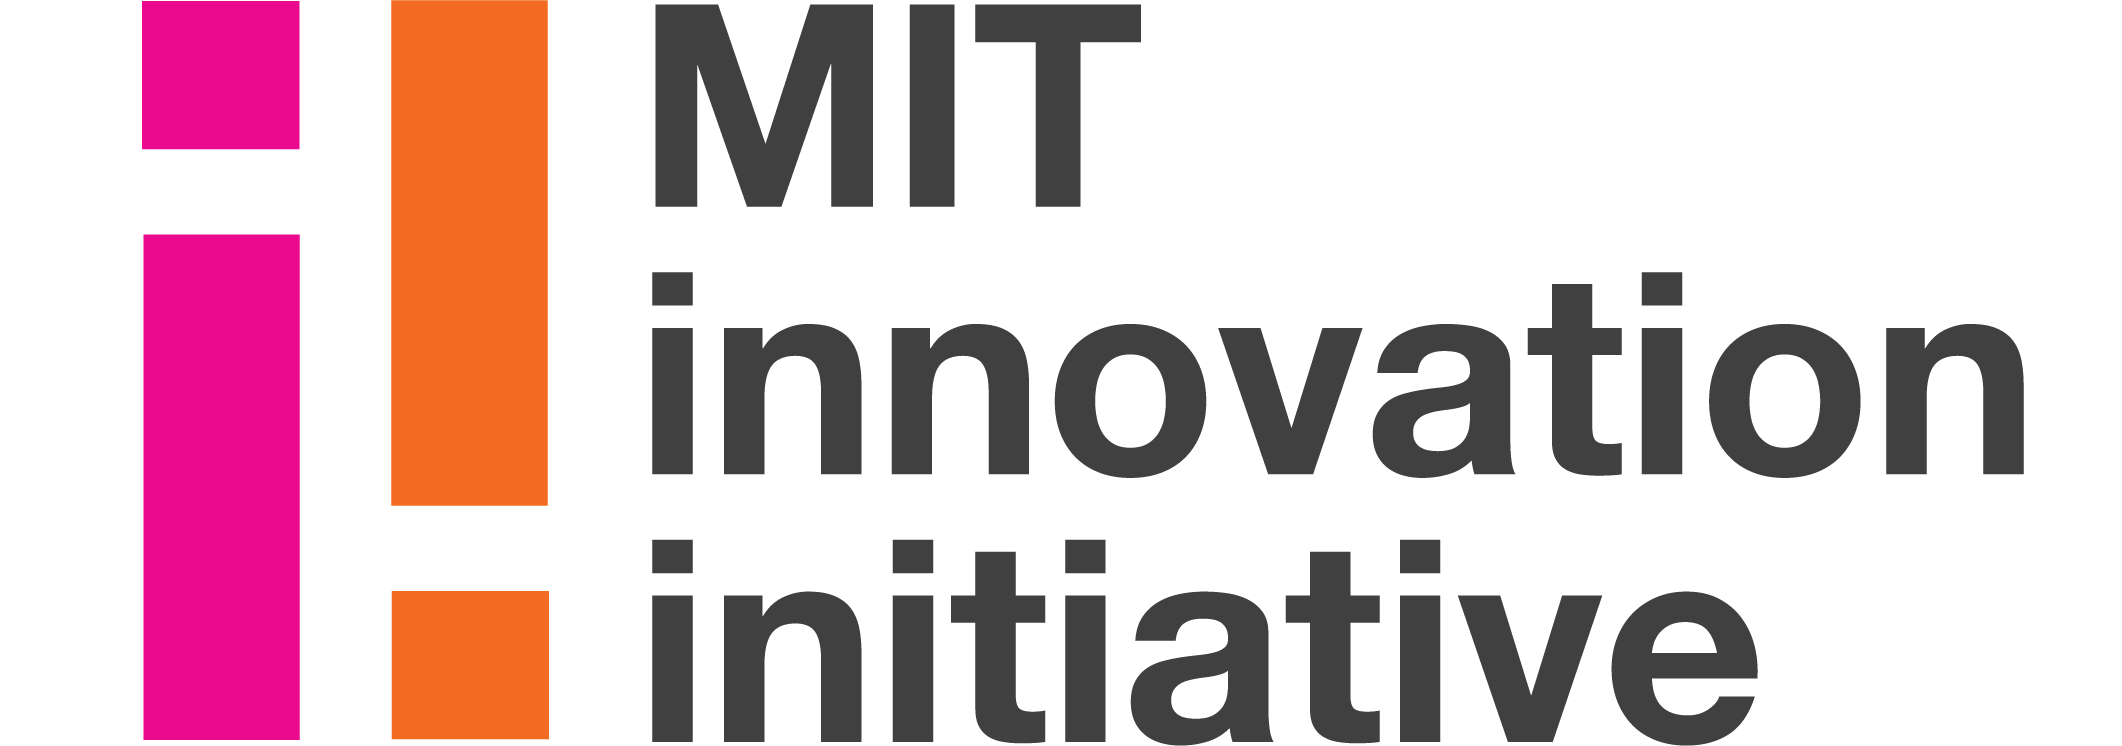 MIT innovation initiative logo